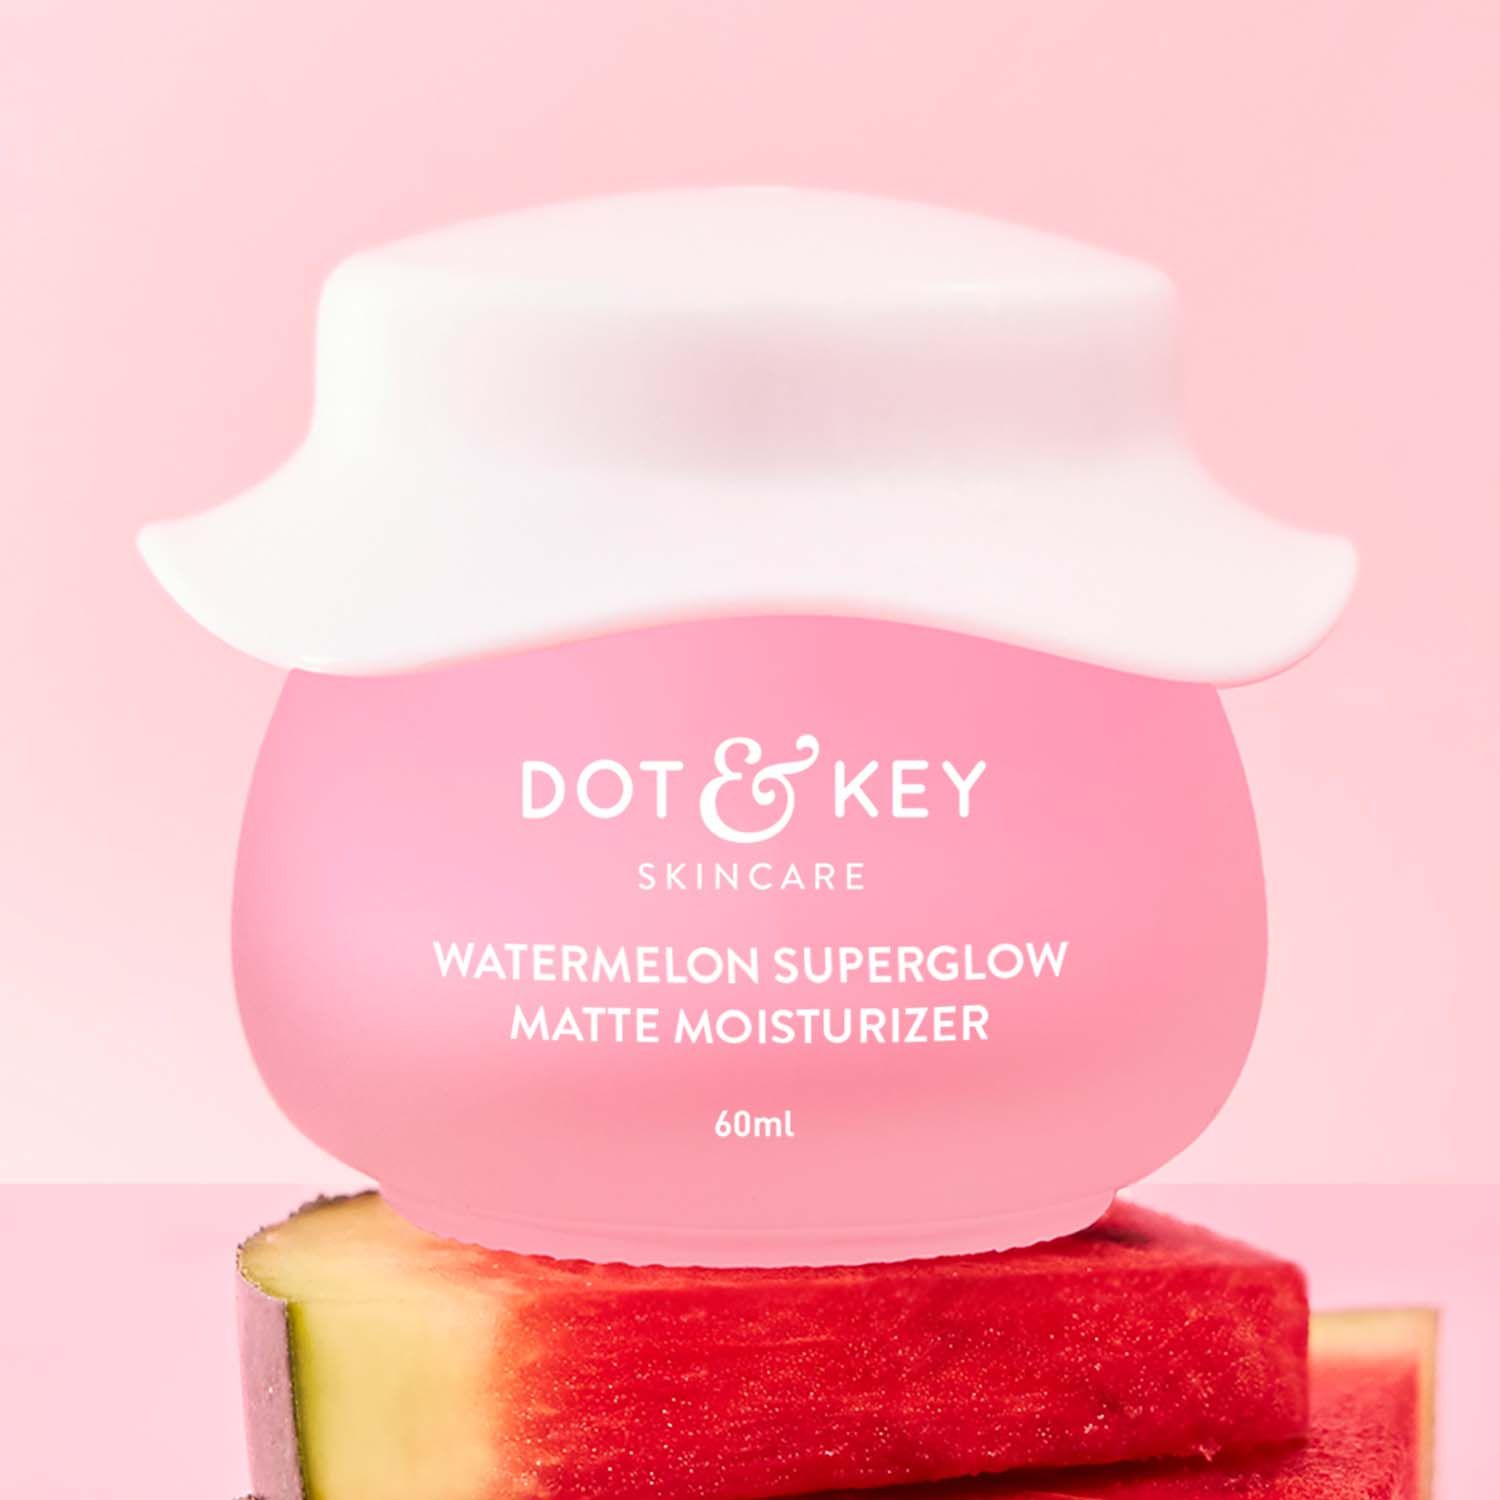 Buy Dot & Key Watermelon Superglow Matte Moisturizer with Watermelon Extracts | peach & Nettle leaf - Purplle